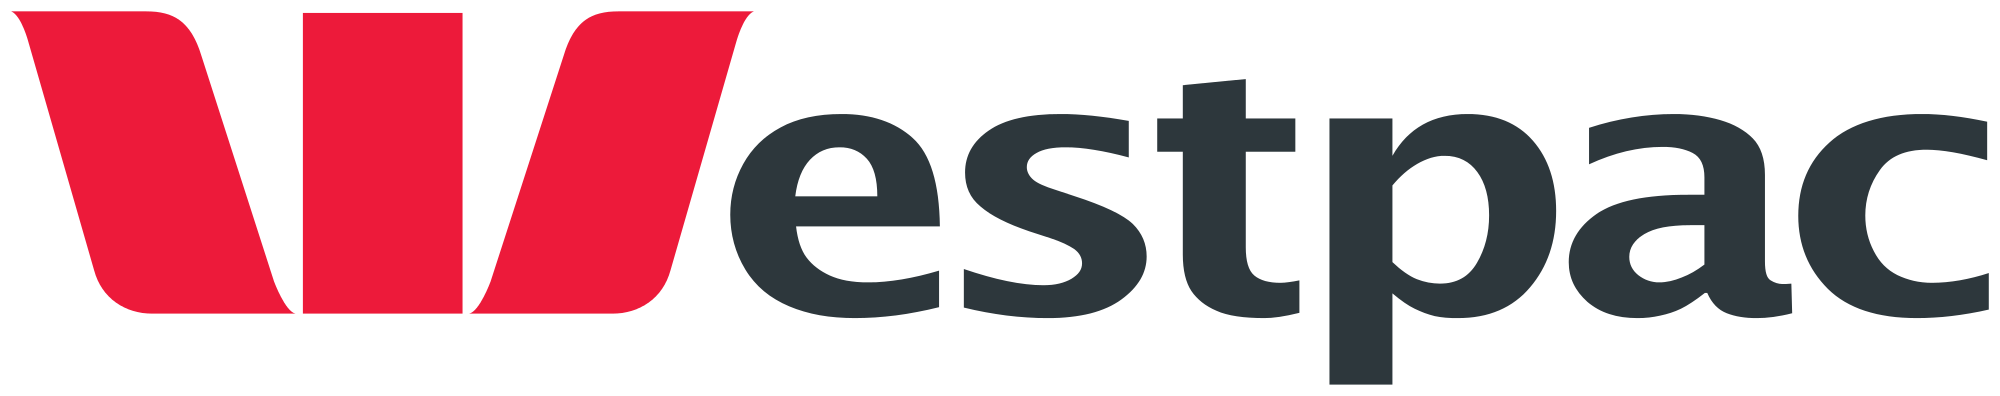 2.Westpac_logo.svg.png